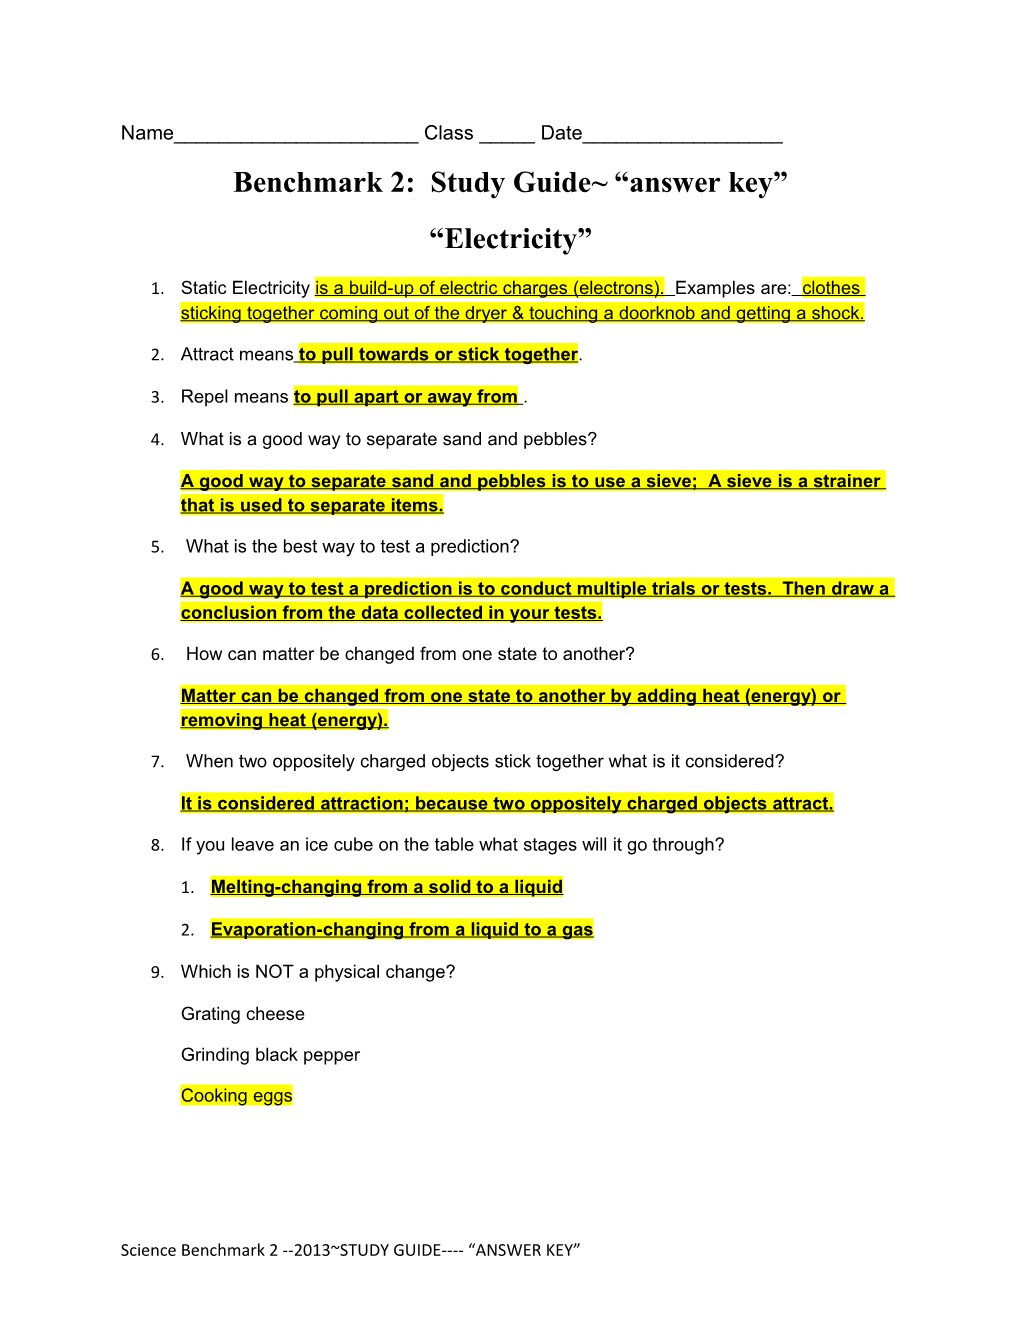 Benchmark 2: Study Guide Answer Key